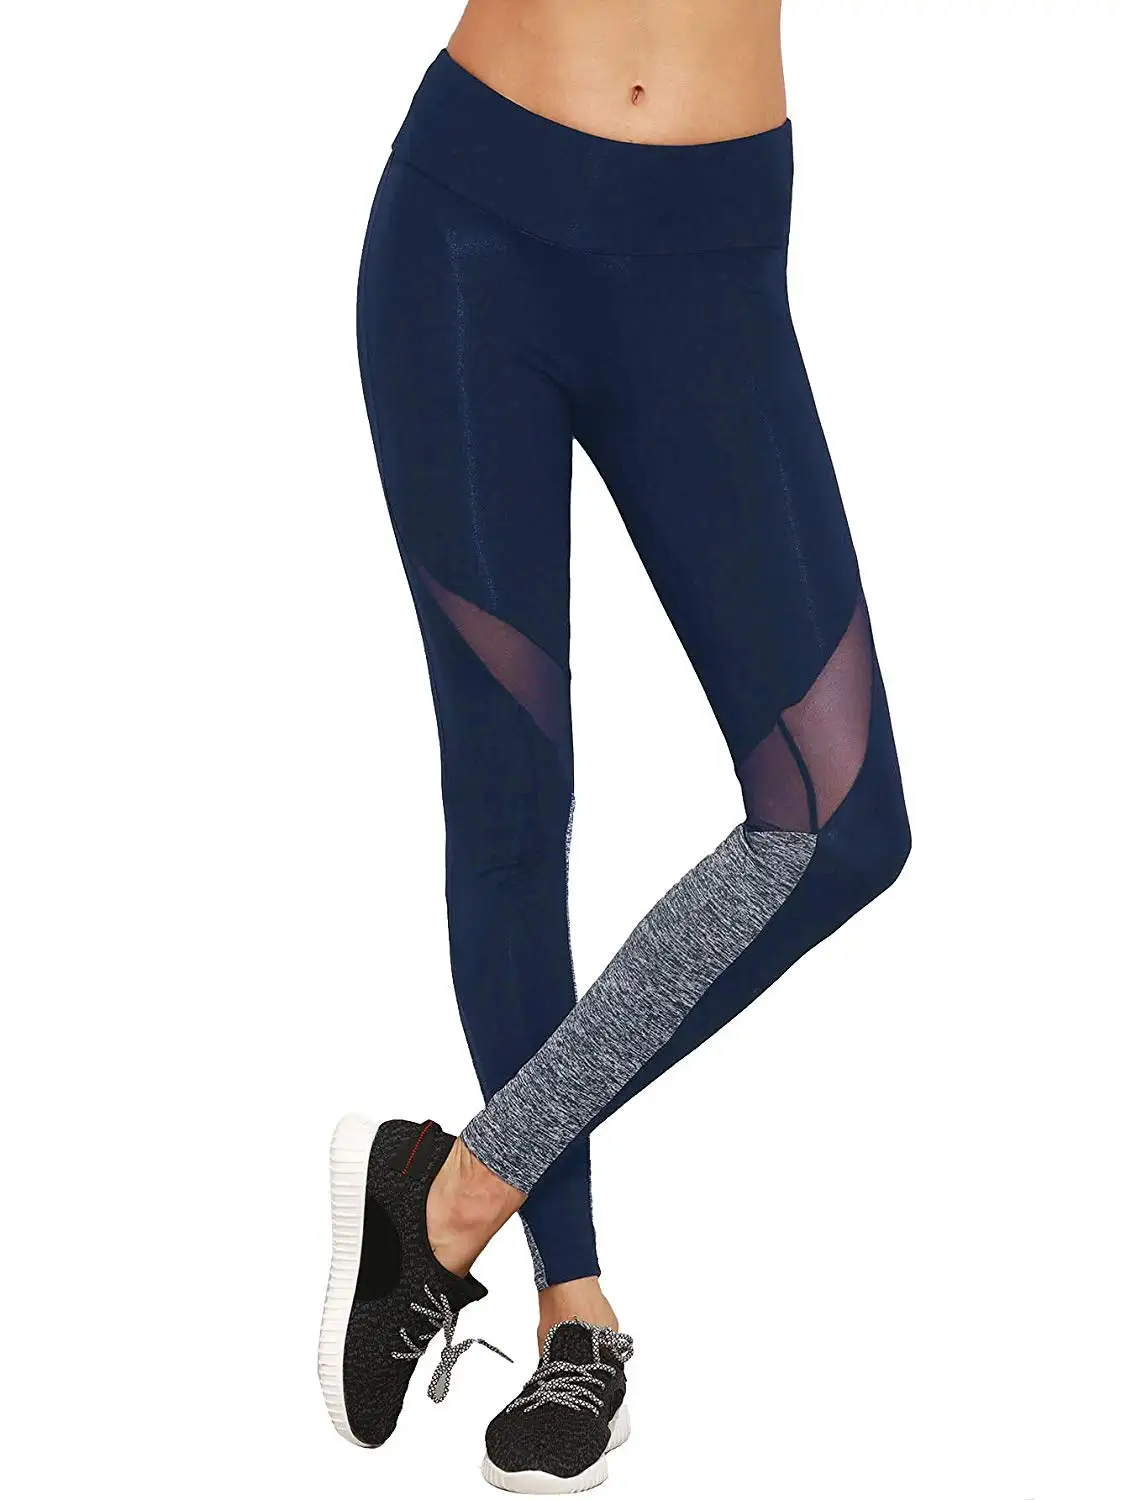 Buy Yofit Womens Stretchy Skinny Sheer Mesh Insert Workout Leggings Yoga Tights Yoga Pants Gym